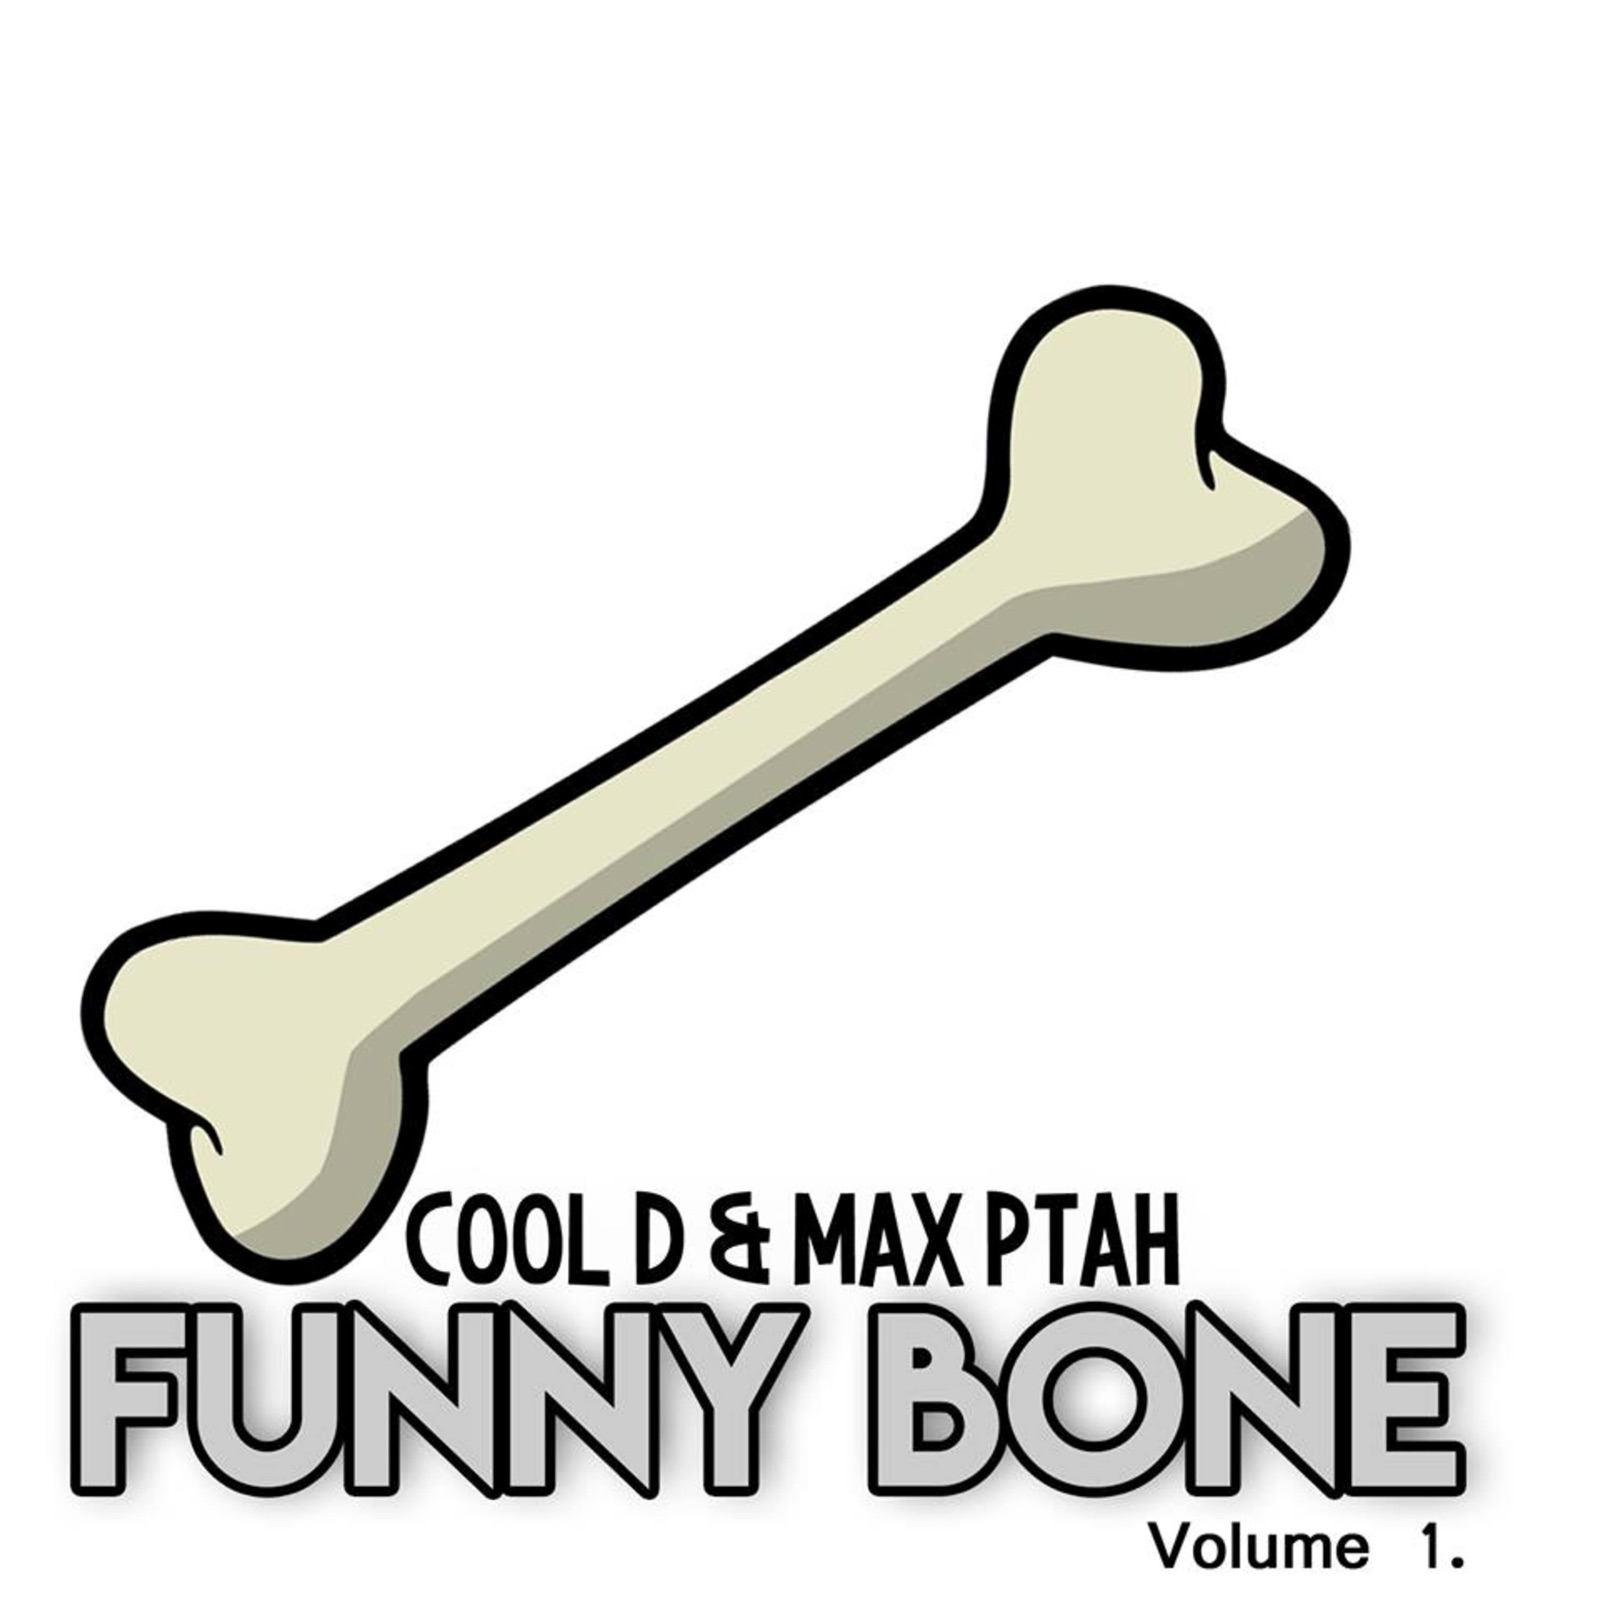 Funny Bone, Vol. 1 (feat. Max Ptah)